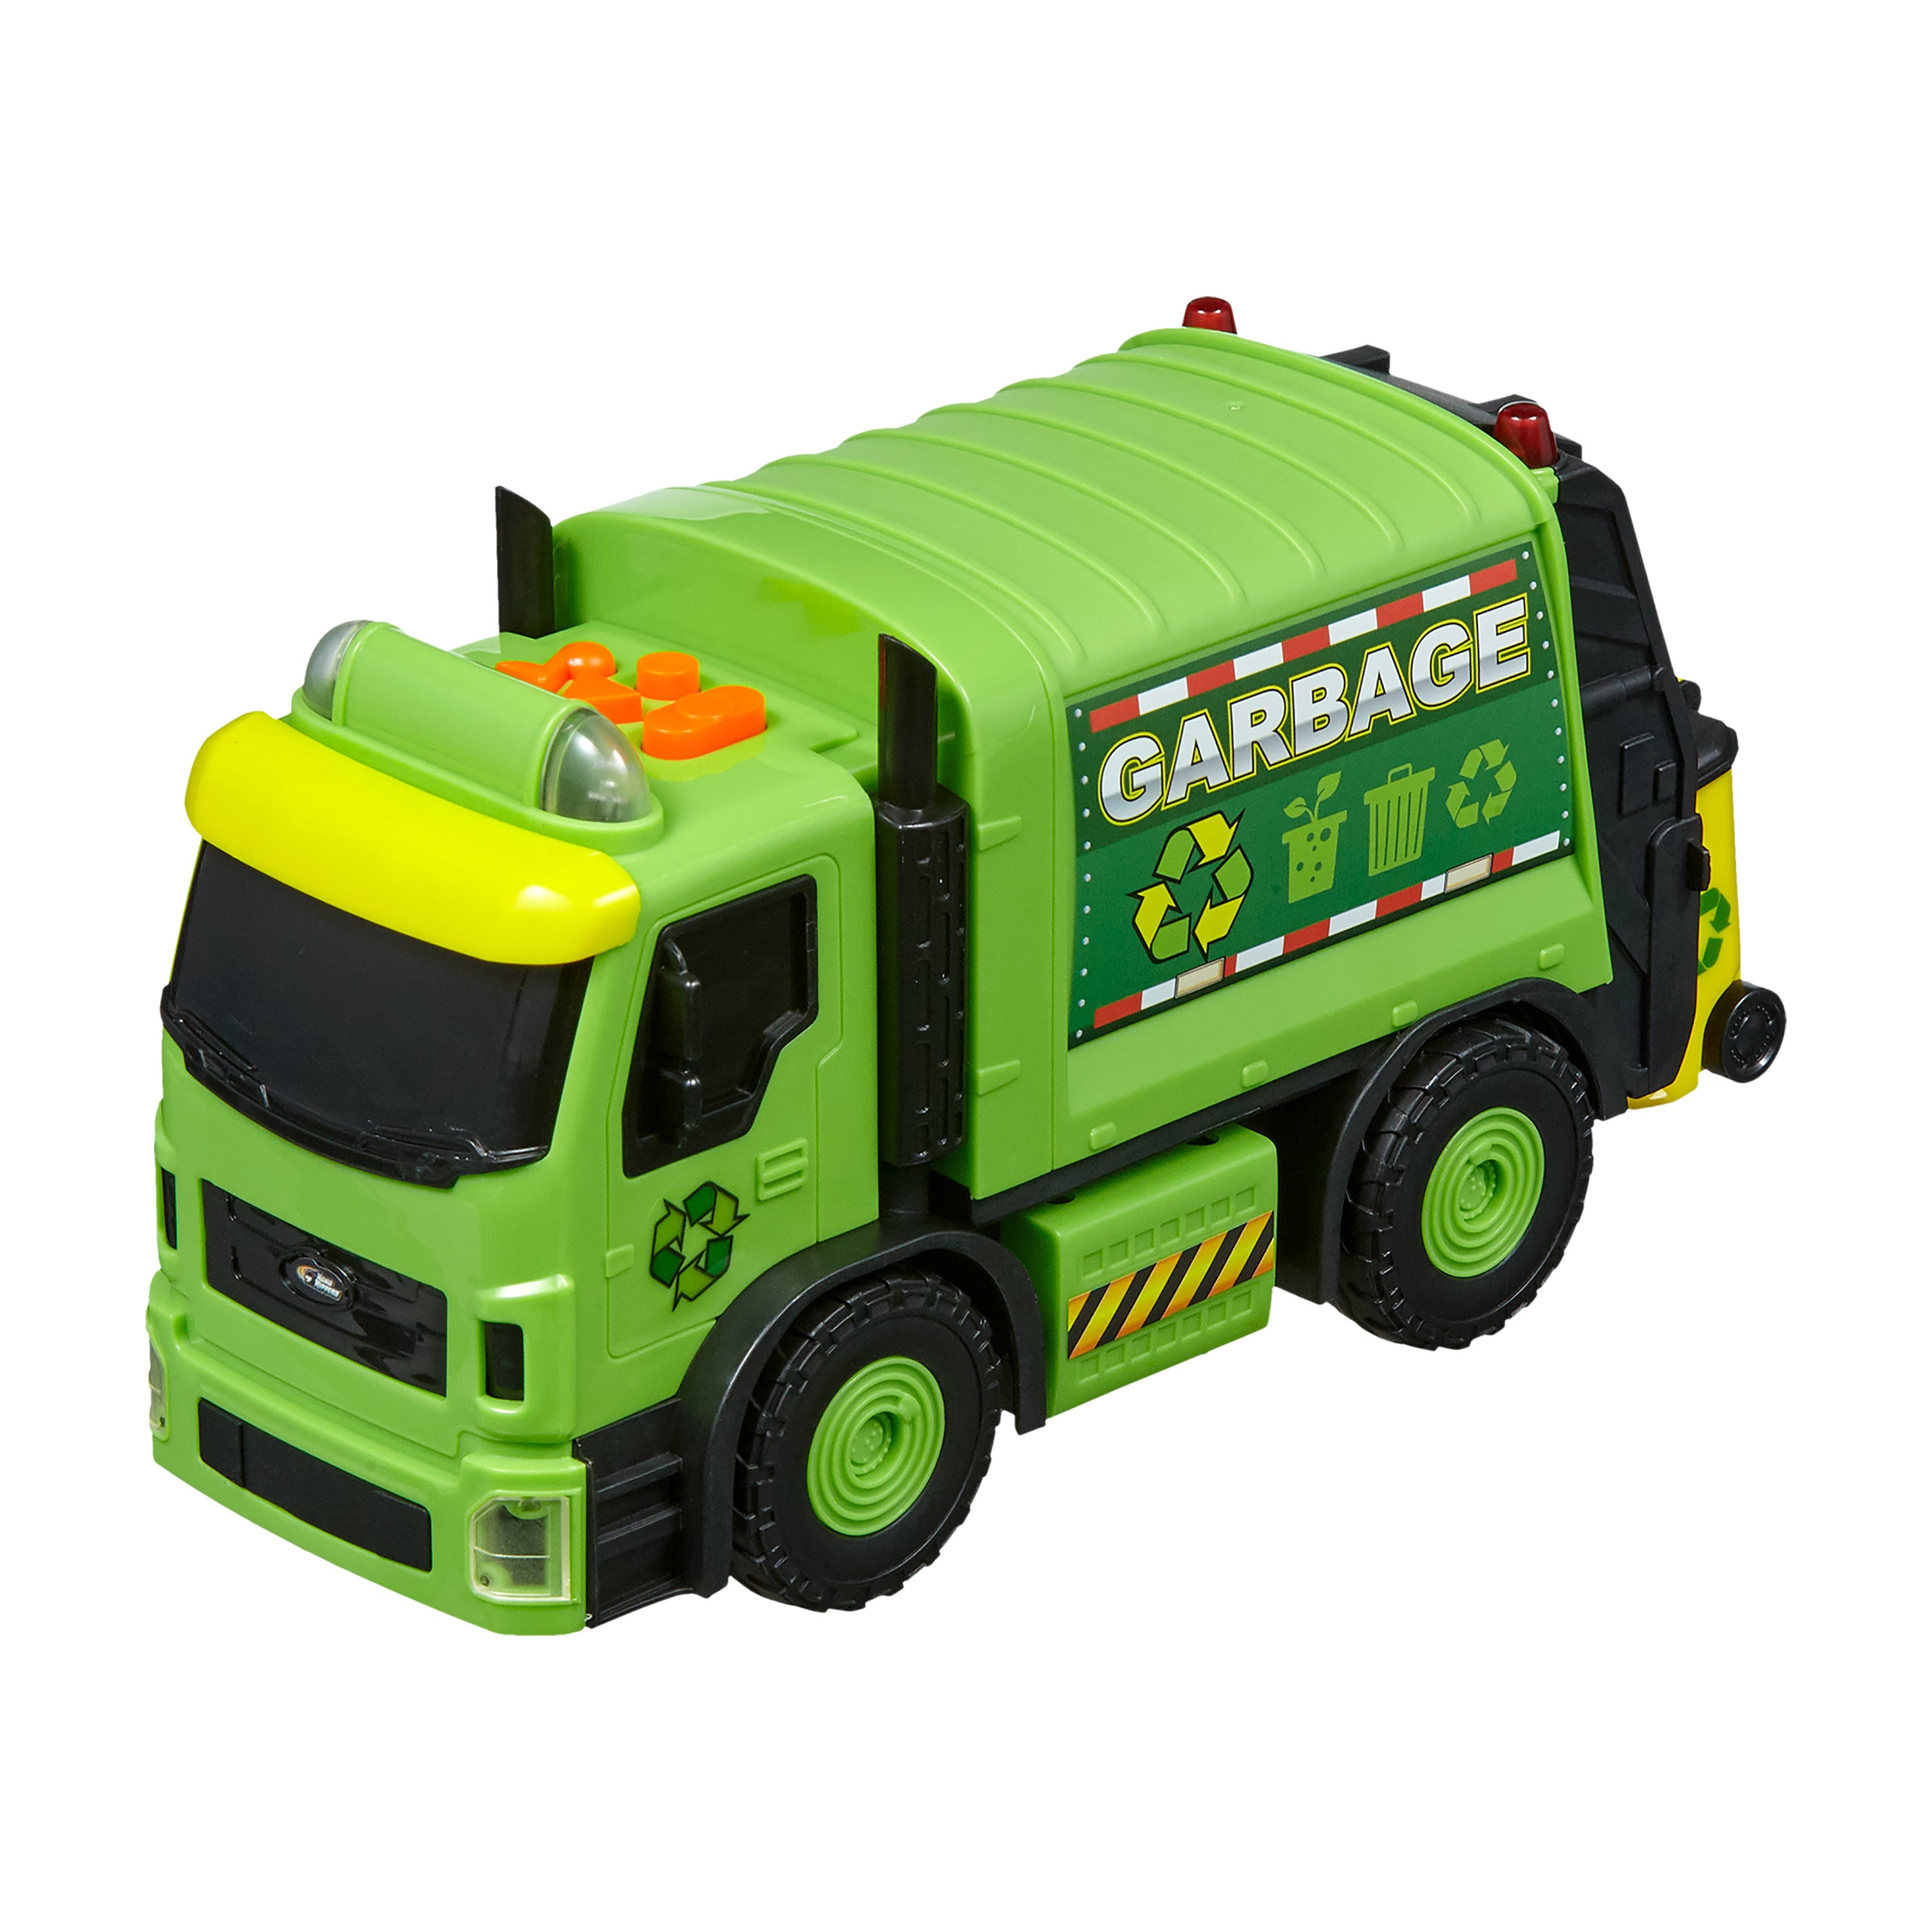 Nikko City Service Fleet -  11" - 28 cm Garbage Truck  | TJ Hughes